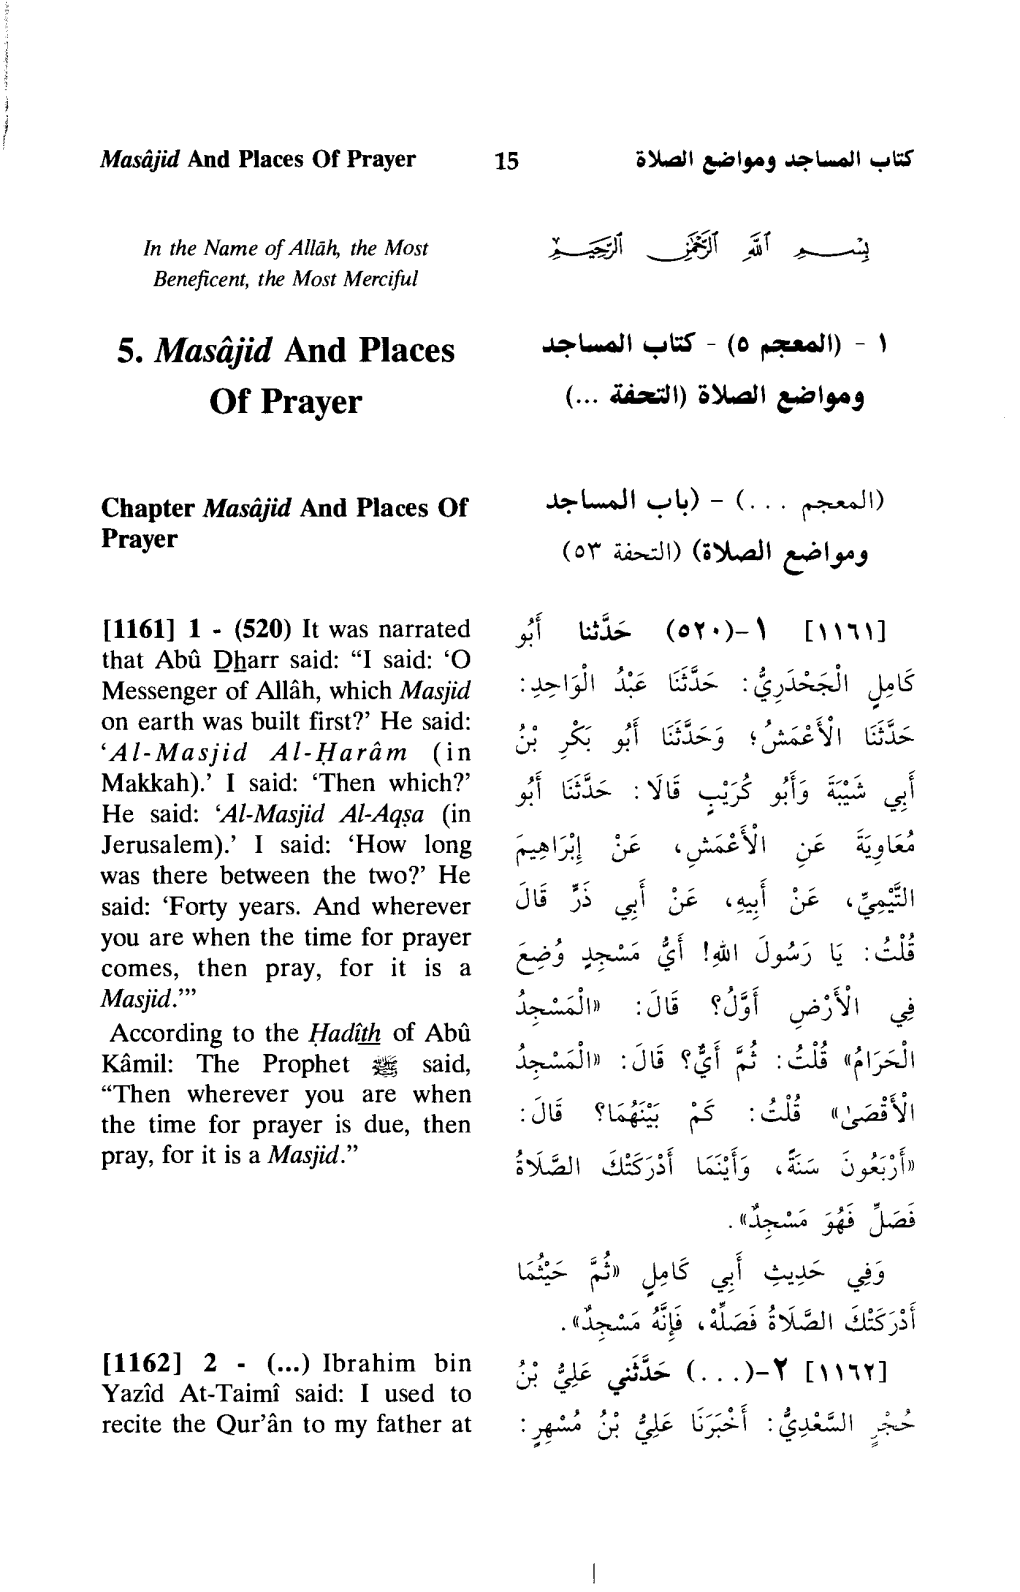 5. Masâjid and Places of Prayer (...� .� SIJ..J